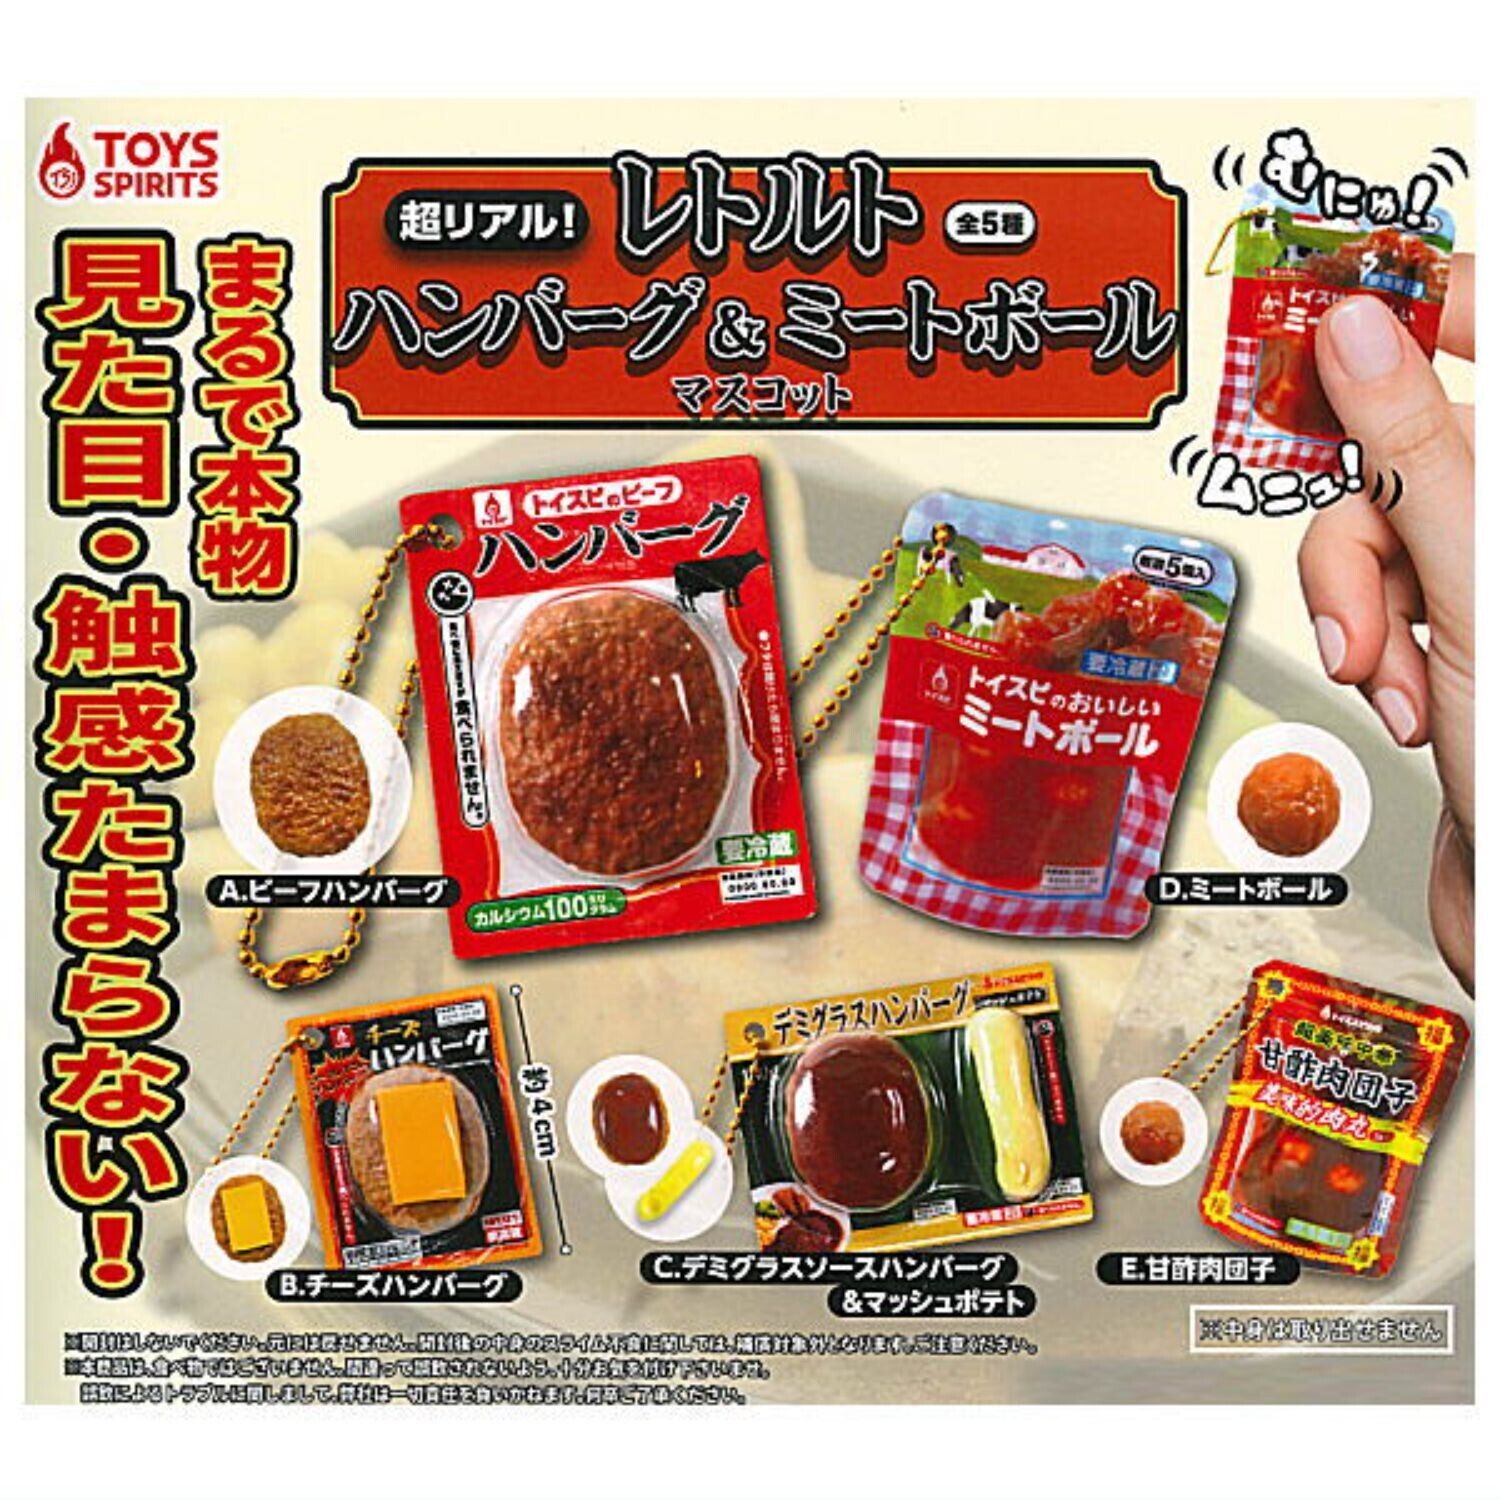 Super real Retort Hamburger & Meatball Mascot Capsule Toy 5 Types Comp Set Gacha